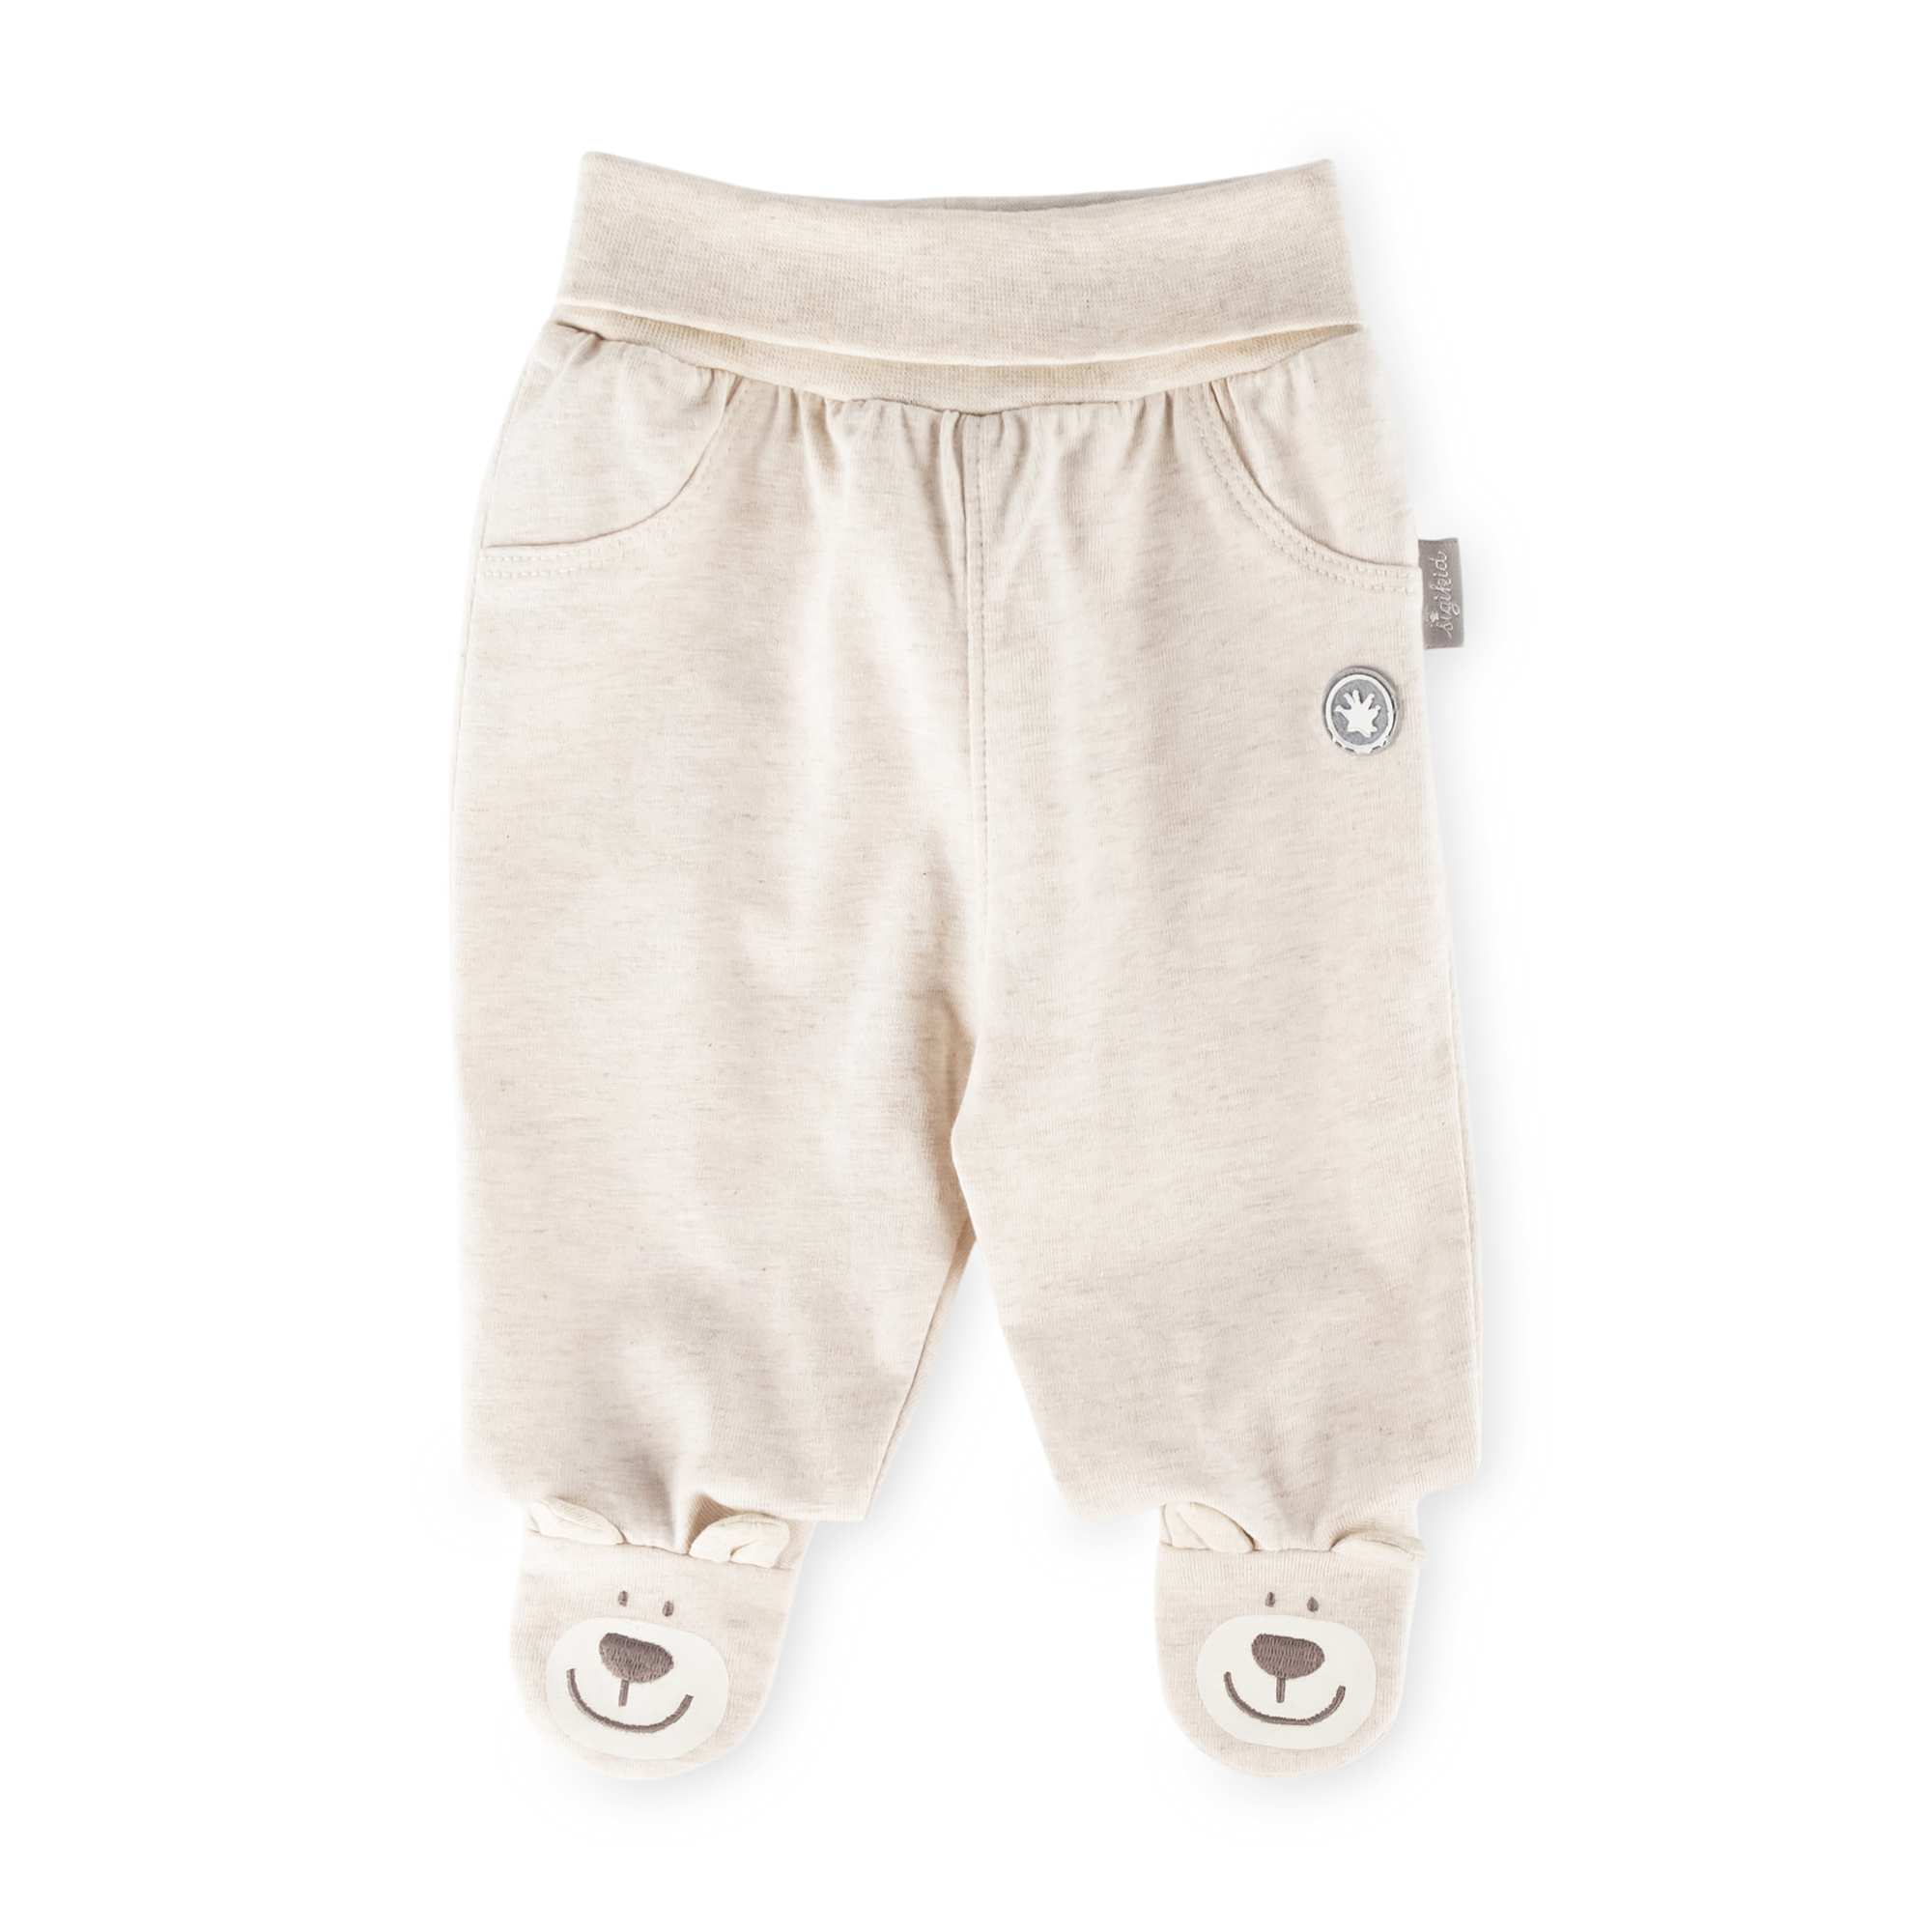 Newborn baby footie pants with bear face feet, écru marl